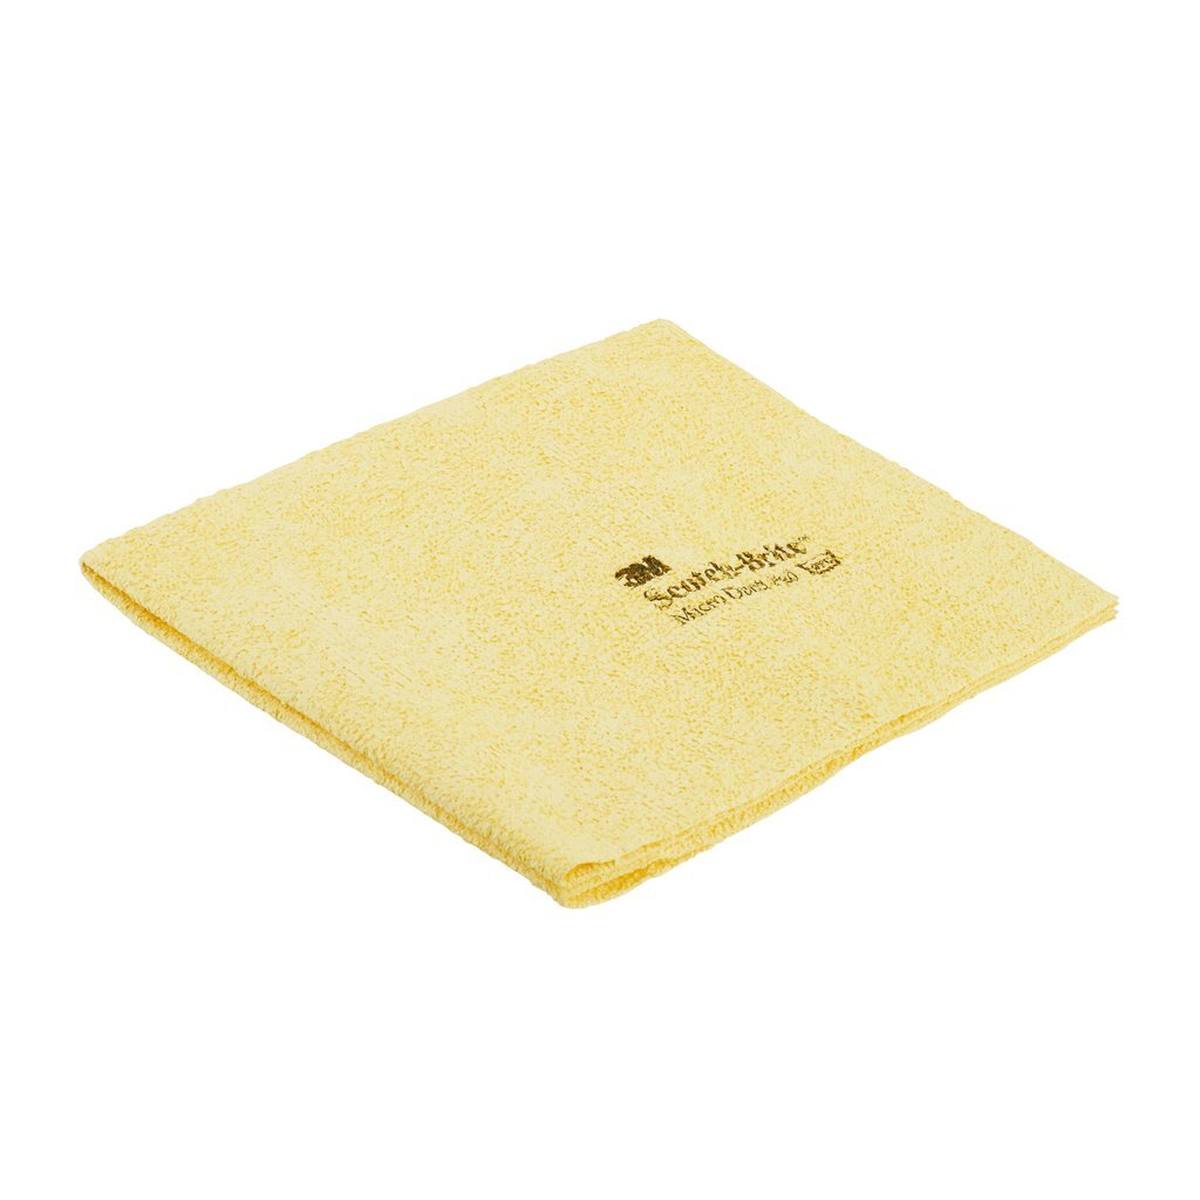 3M Scotch-Brite Micro Duett microfiber cloth, yellow, without print, 320 mm x 400 mm